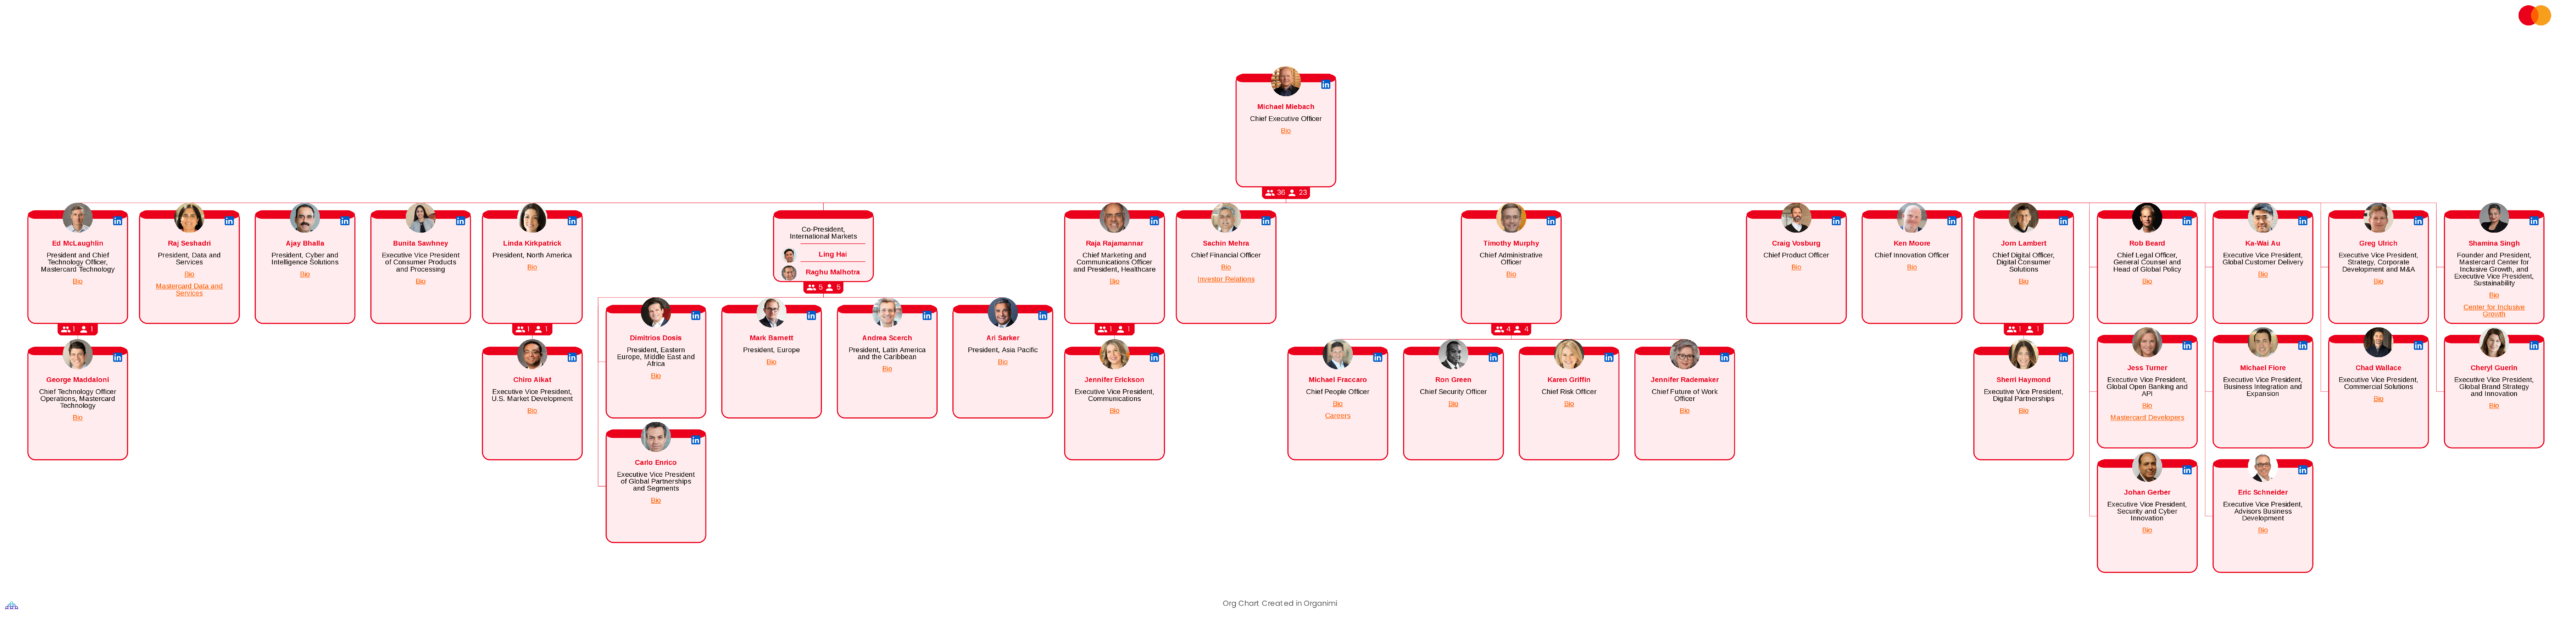 Mastercard's Organizational Structure Chart